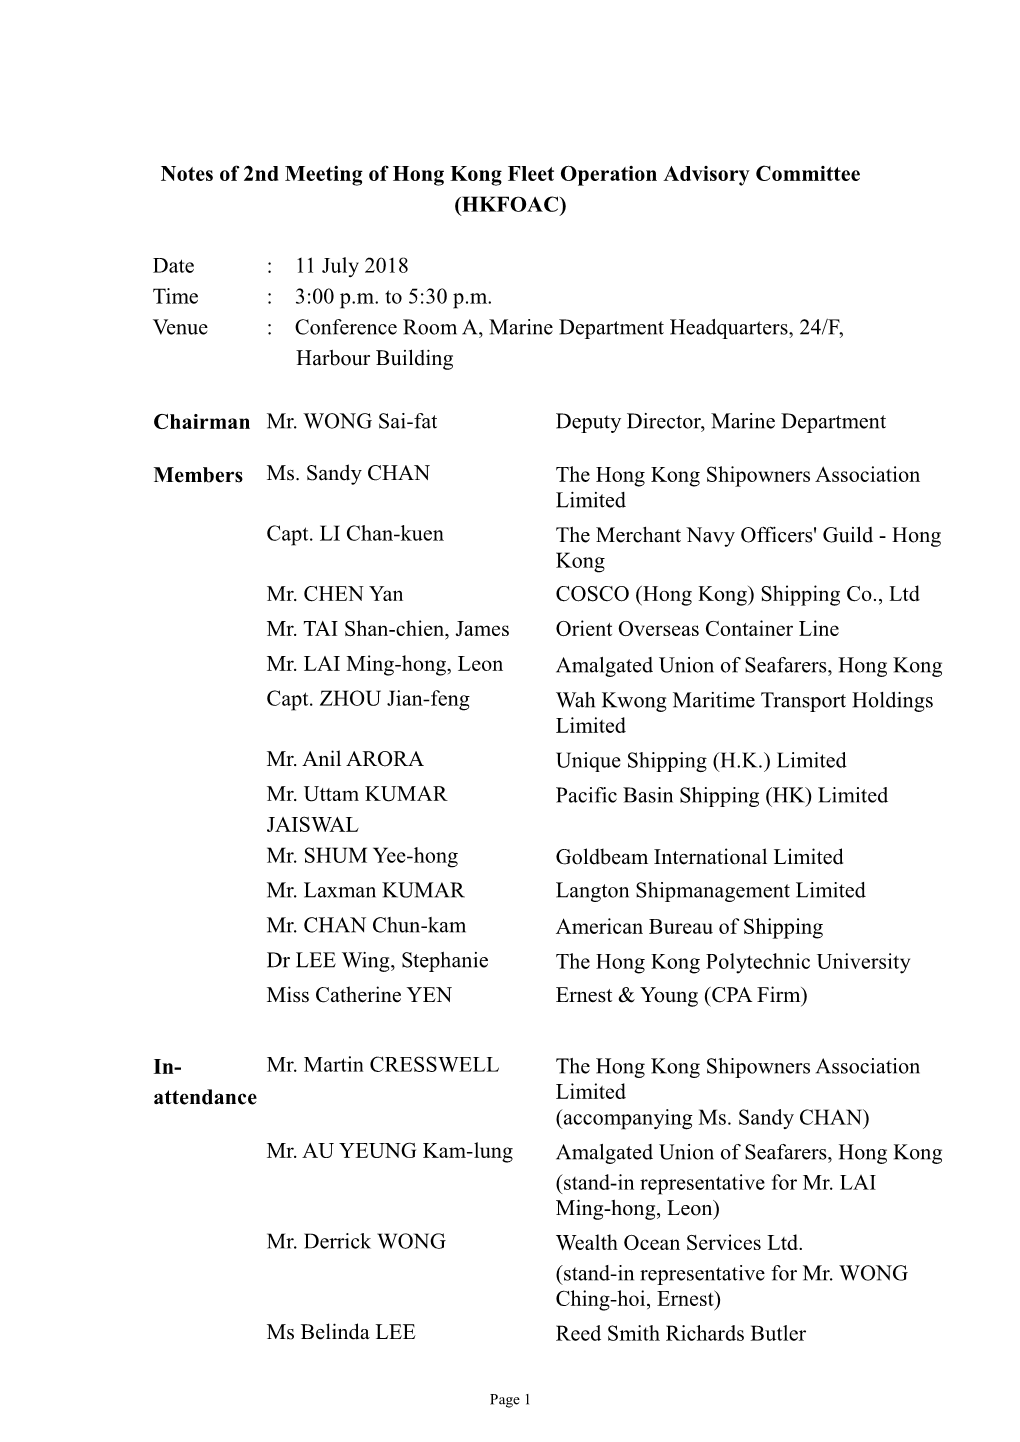 HKFOAC 2Nd Meeting (11.7.2018)